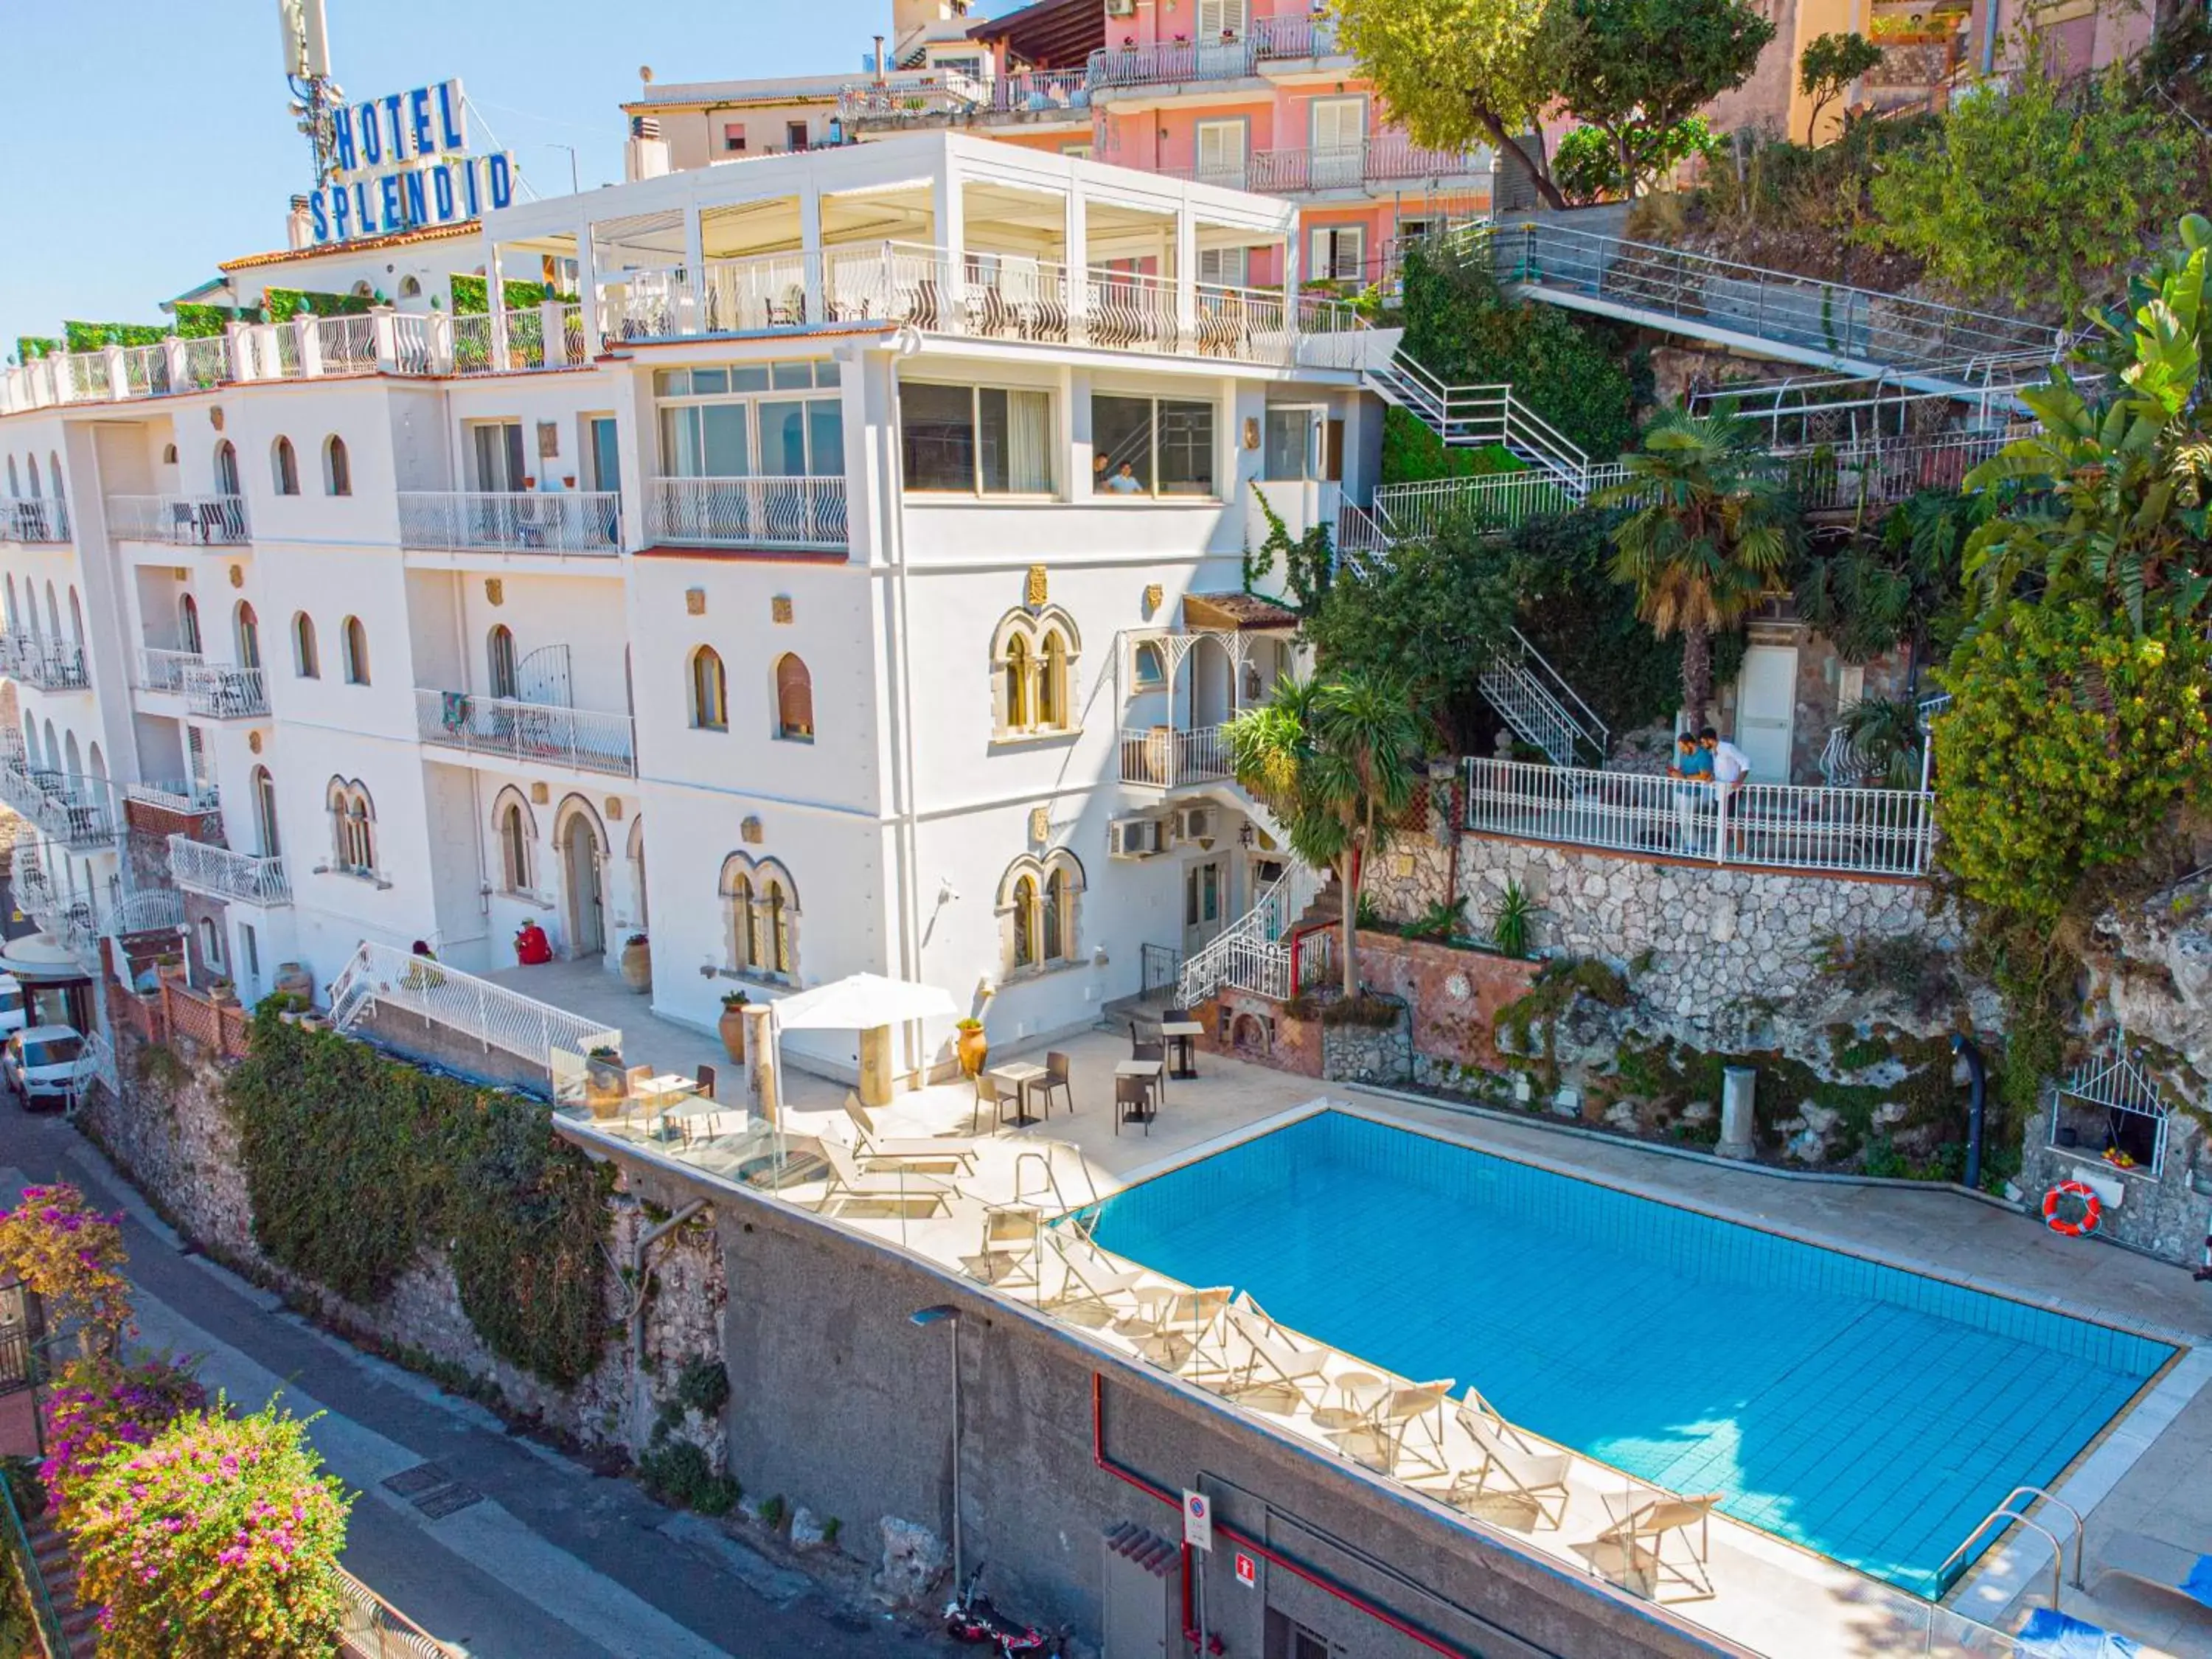 Property building, Pool View in Splendid Hotel Taormina